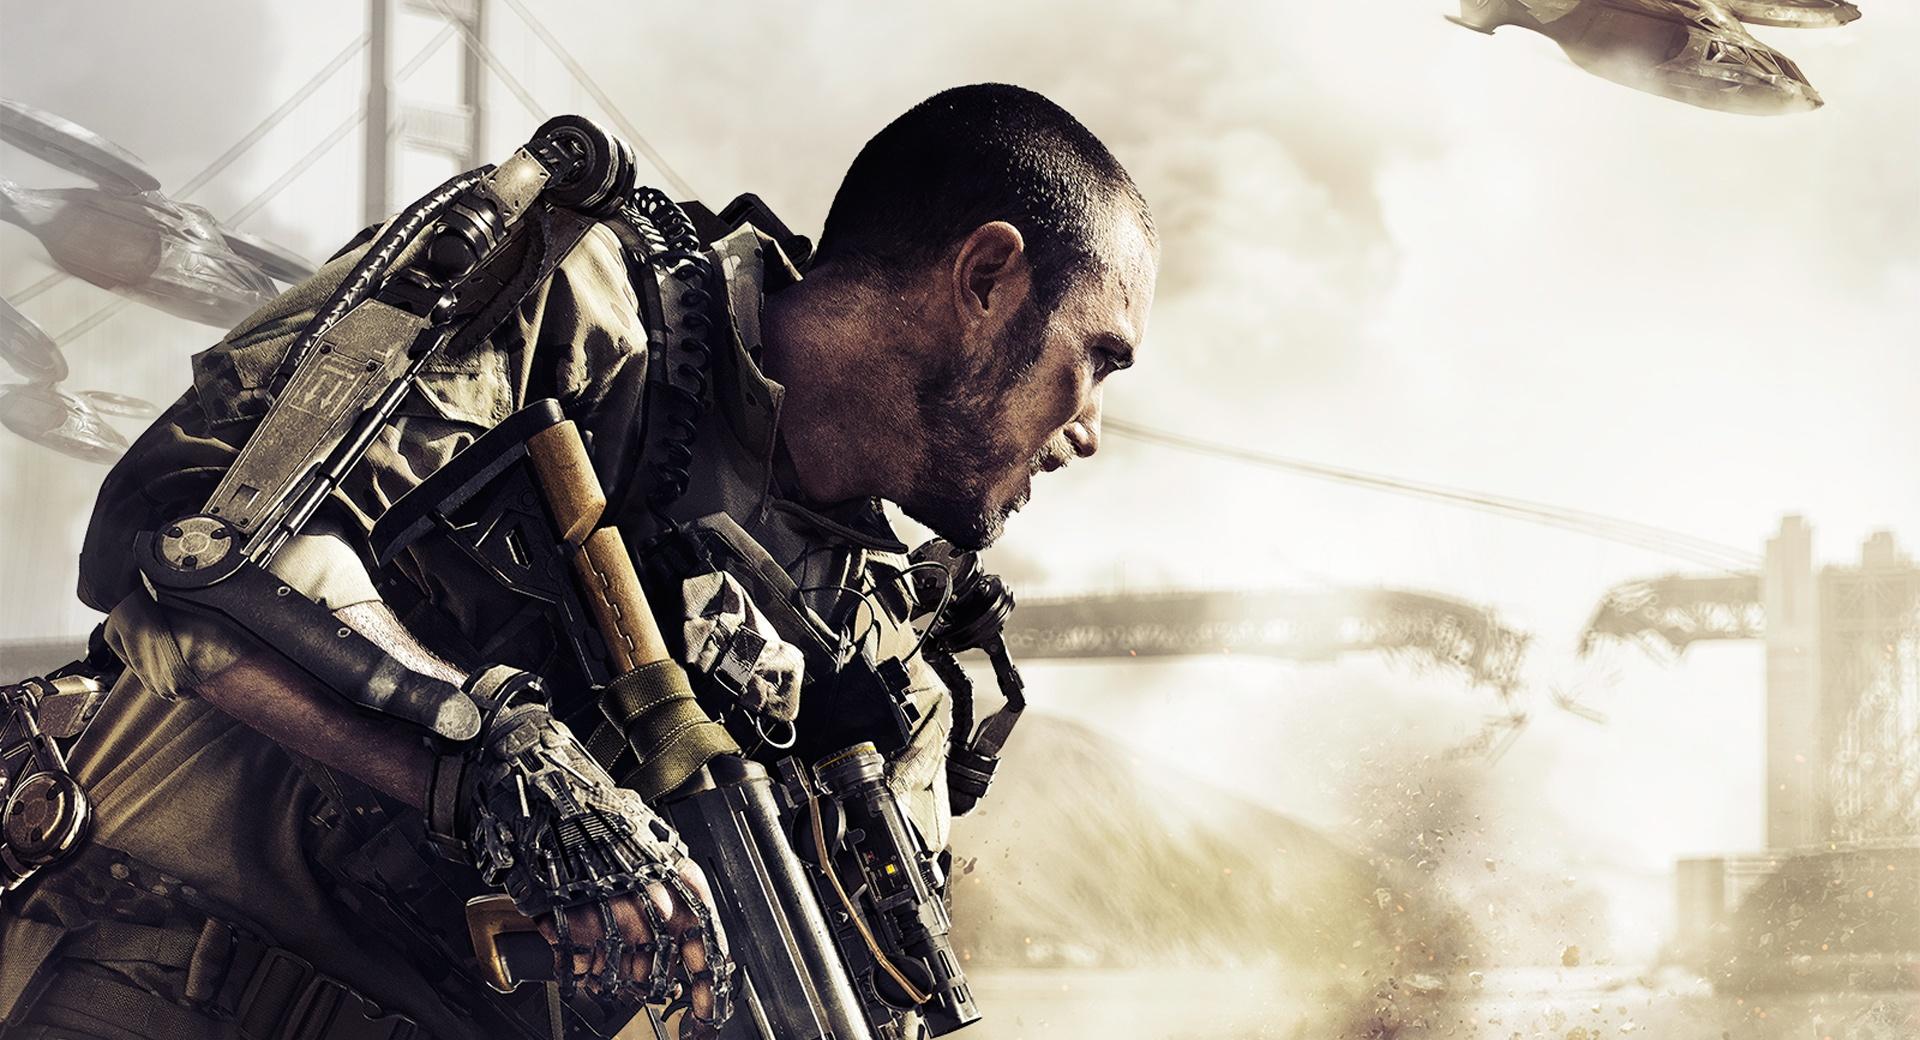 COD Advanced Warfare 2014 video game at 1024 x 1024 iPad size wallpapers HD quality